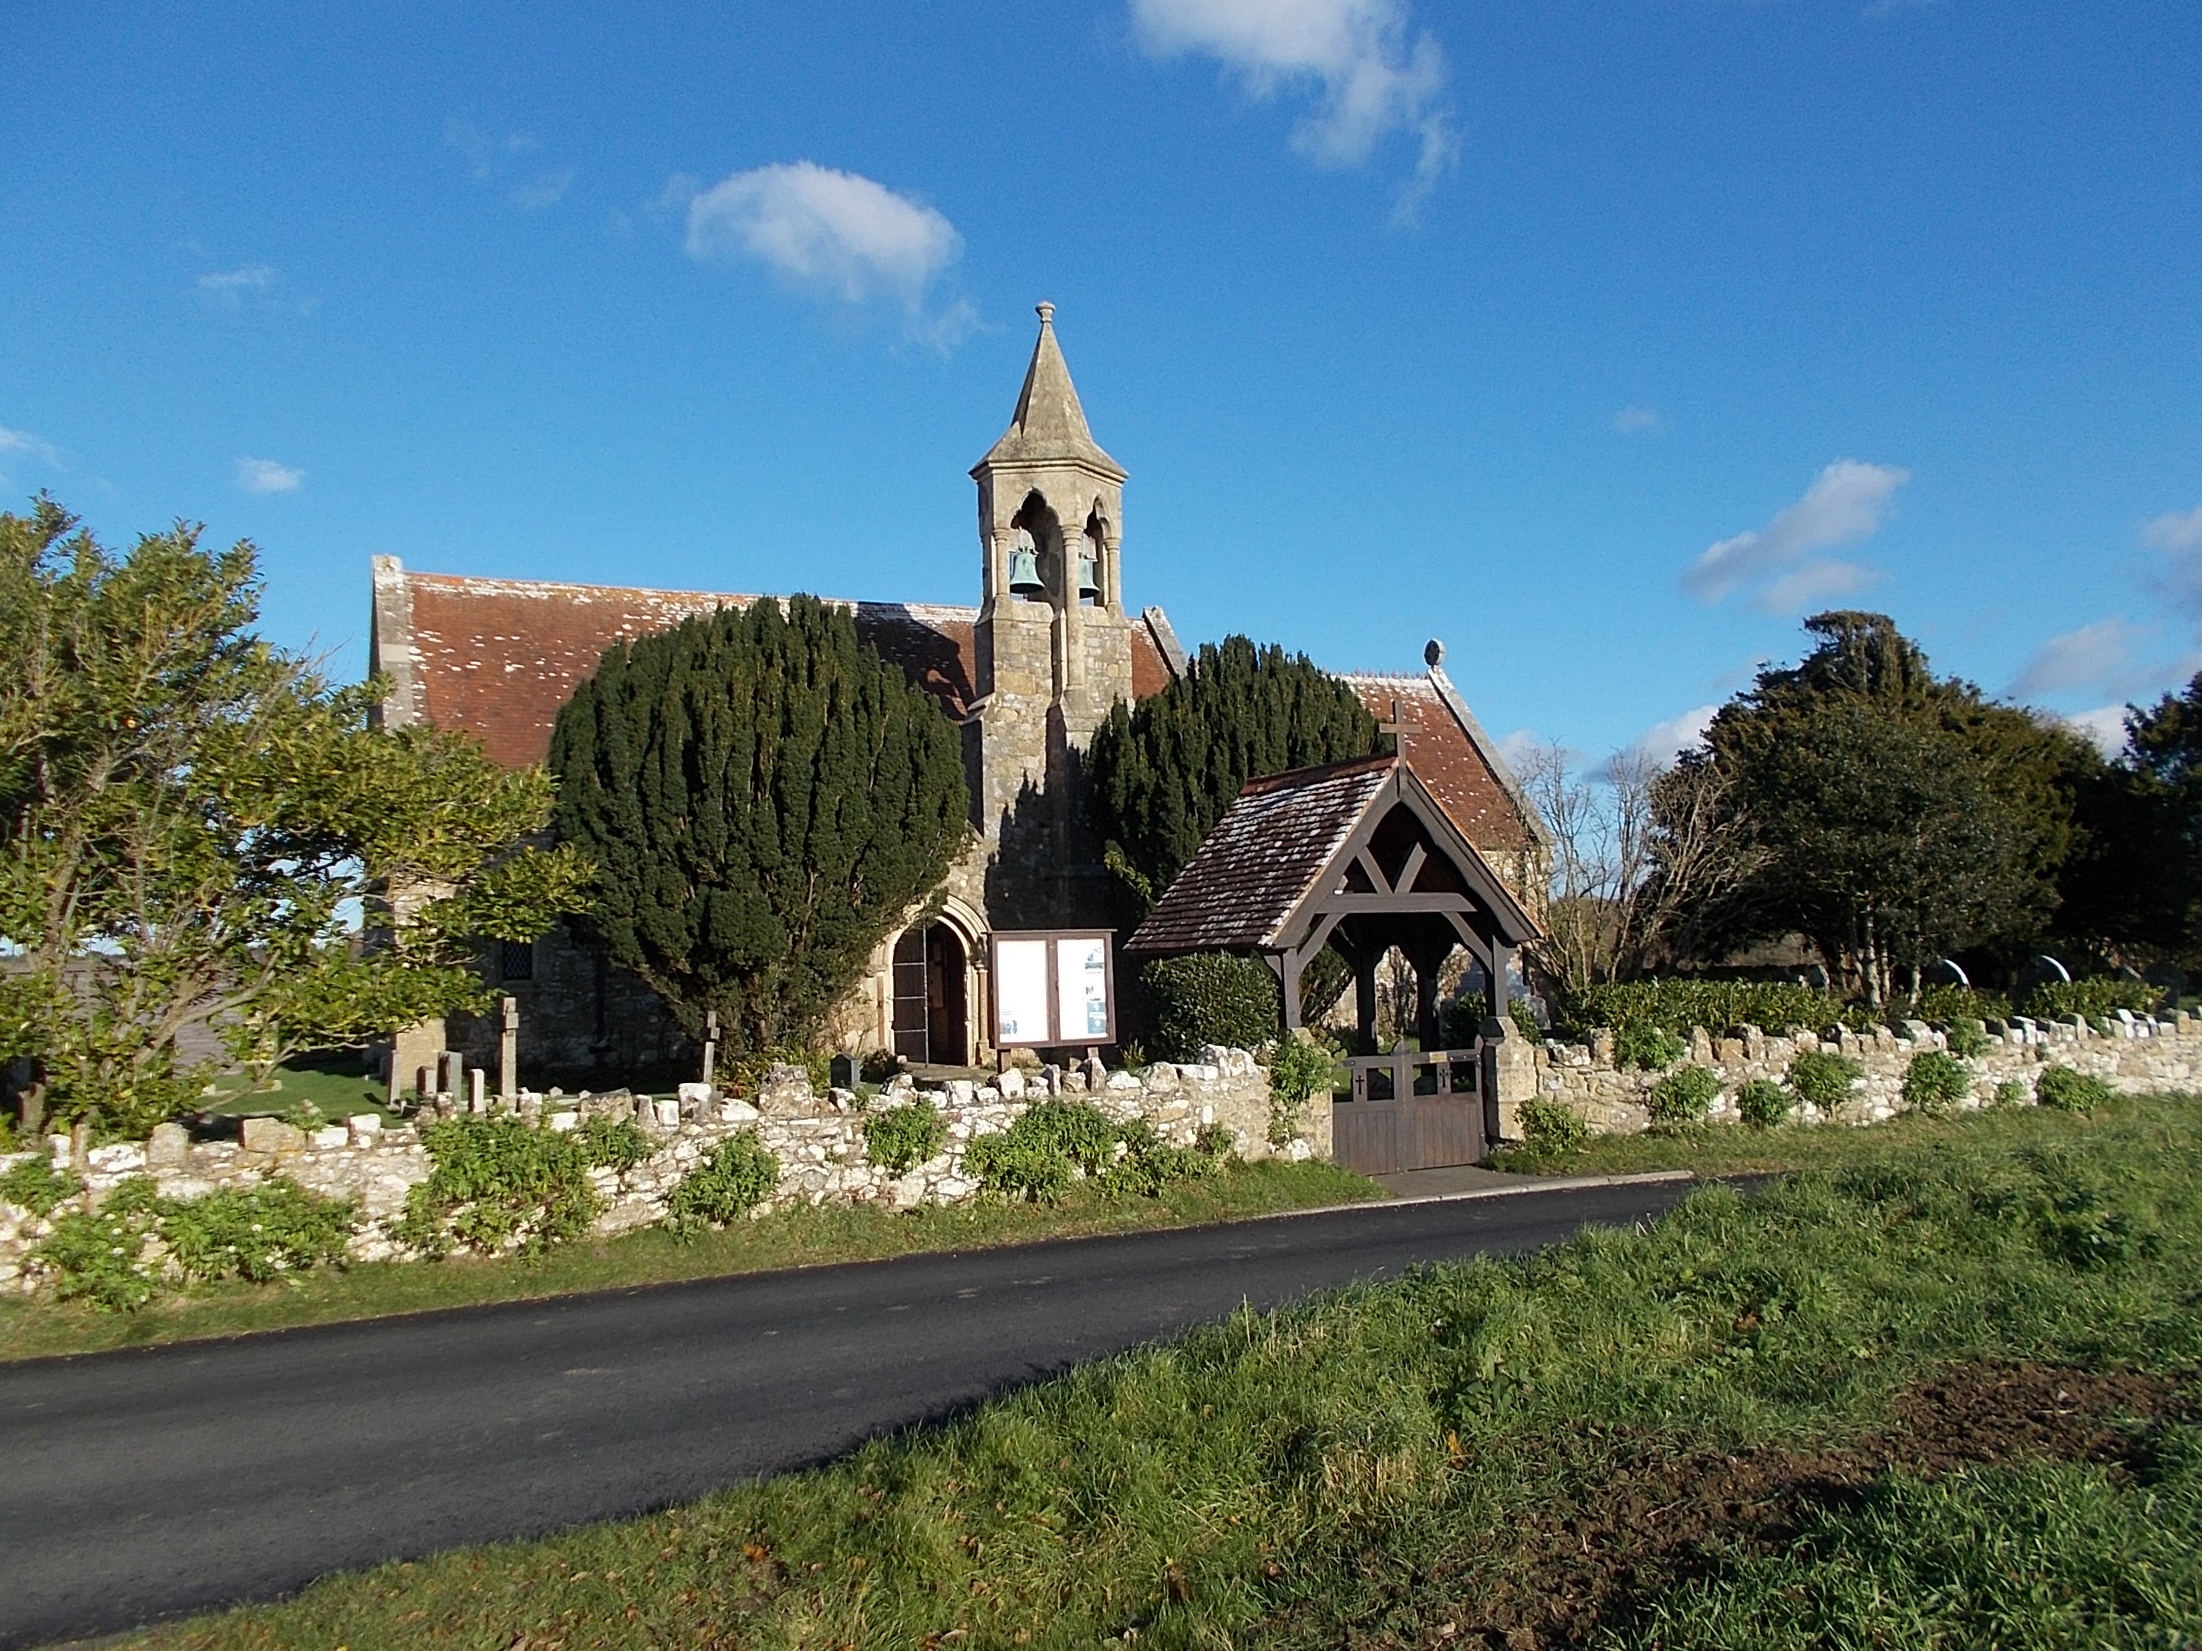 St Swithun's Church, Thorley